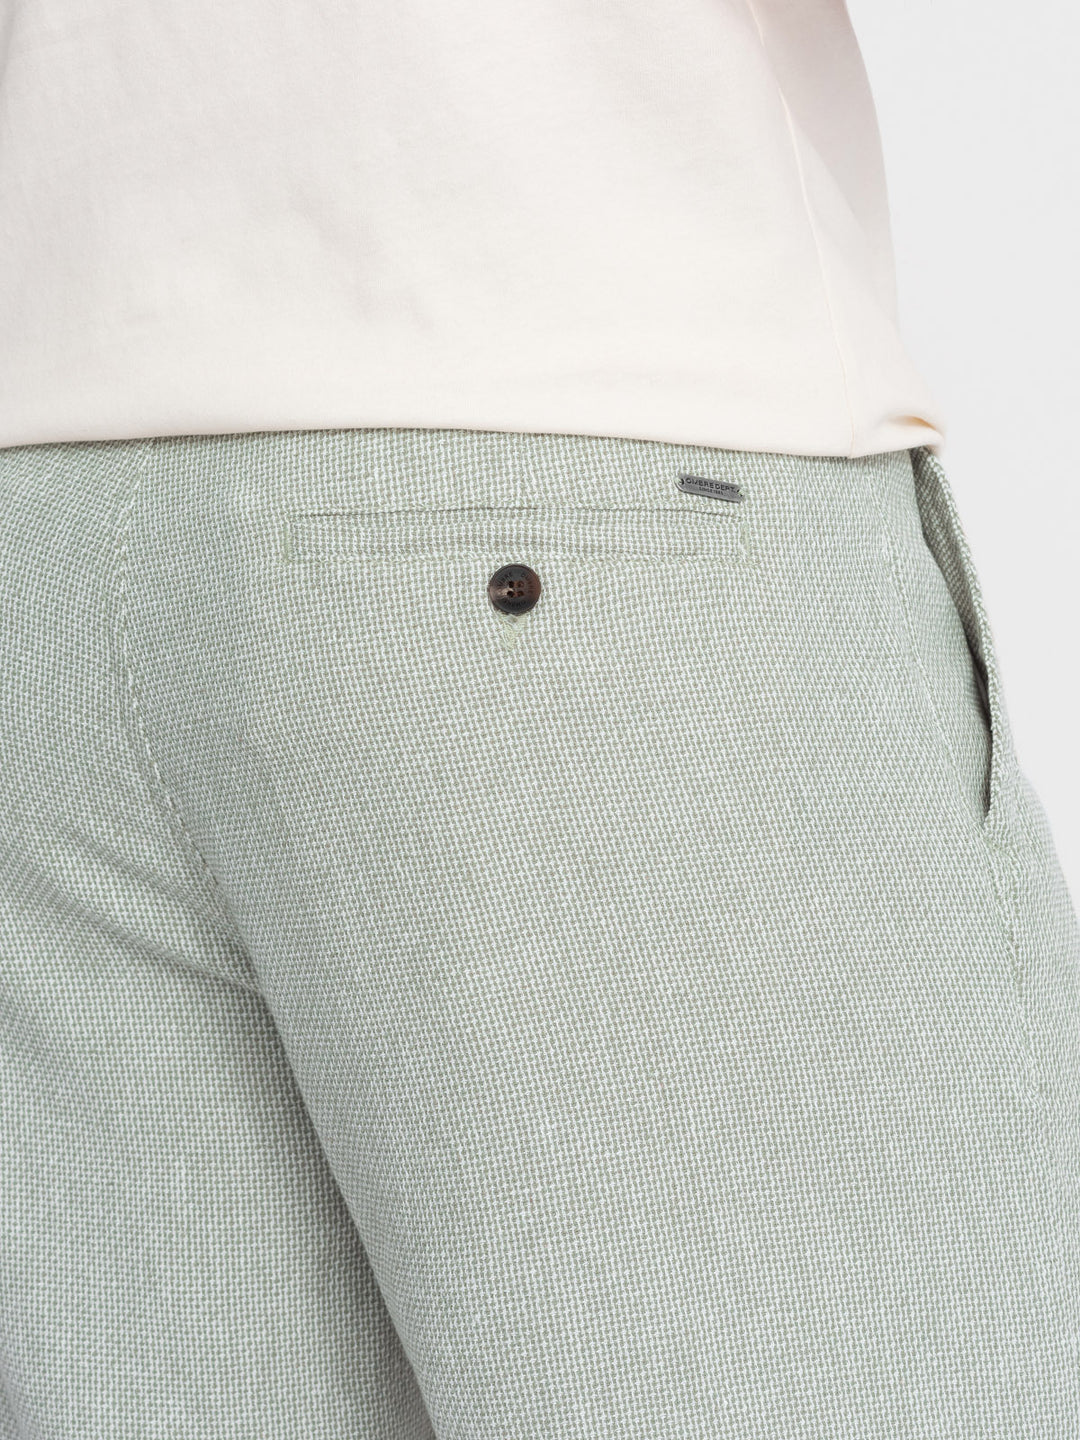 Baumwoll-Leinen-Shorts